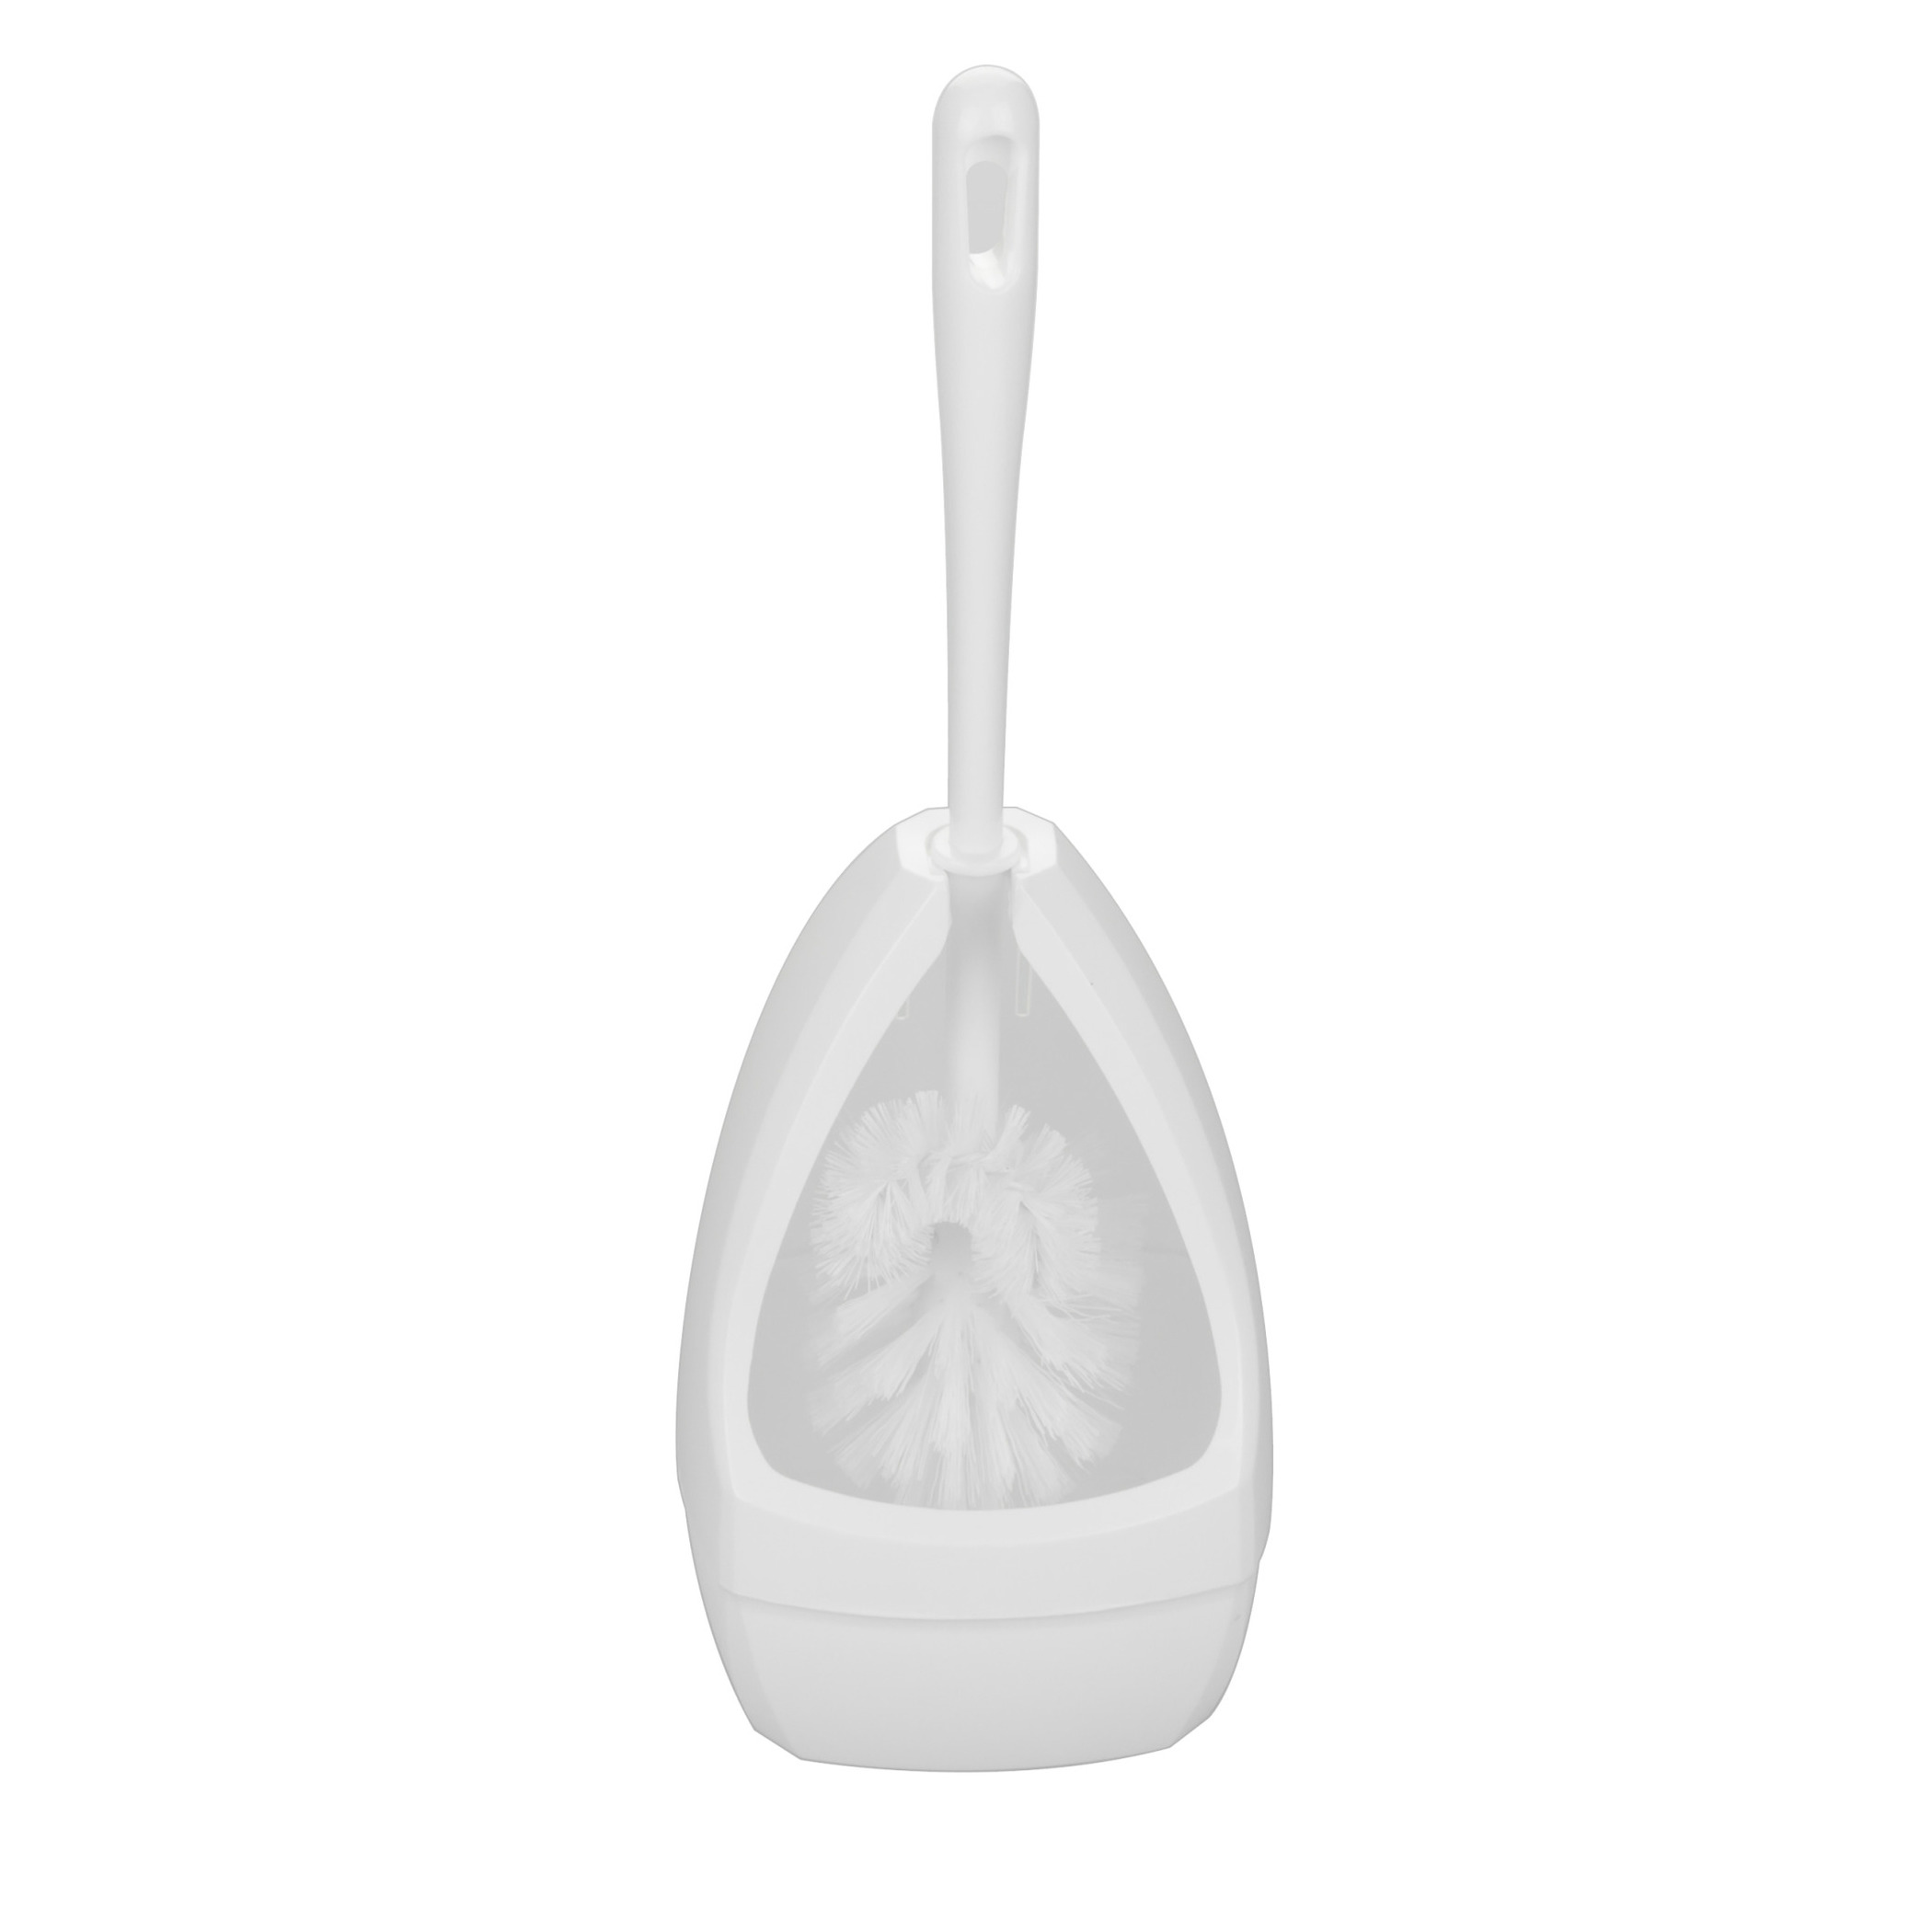 Brumag Wc-borstel/toiletborstel met randreiniger inclusief houder wit 39.5 cm van kunststof -